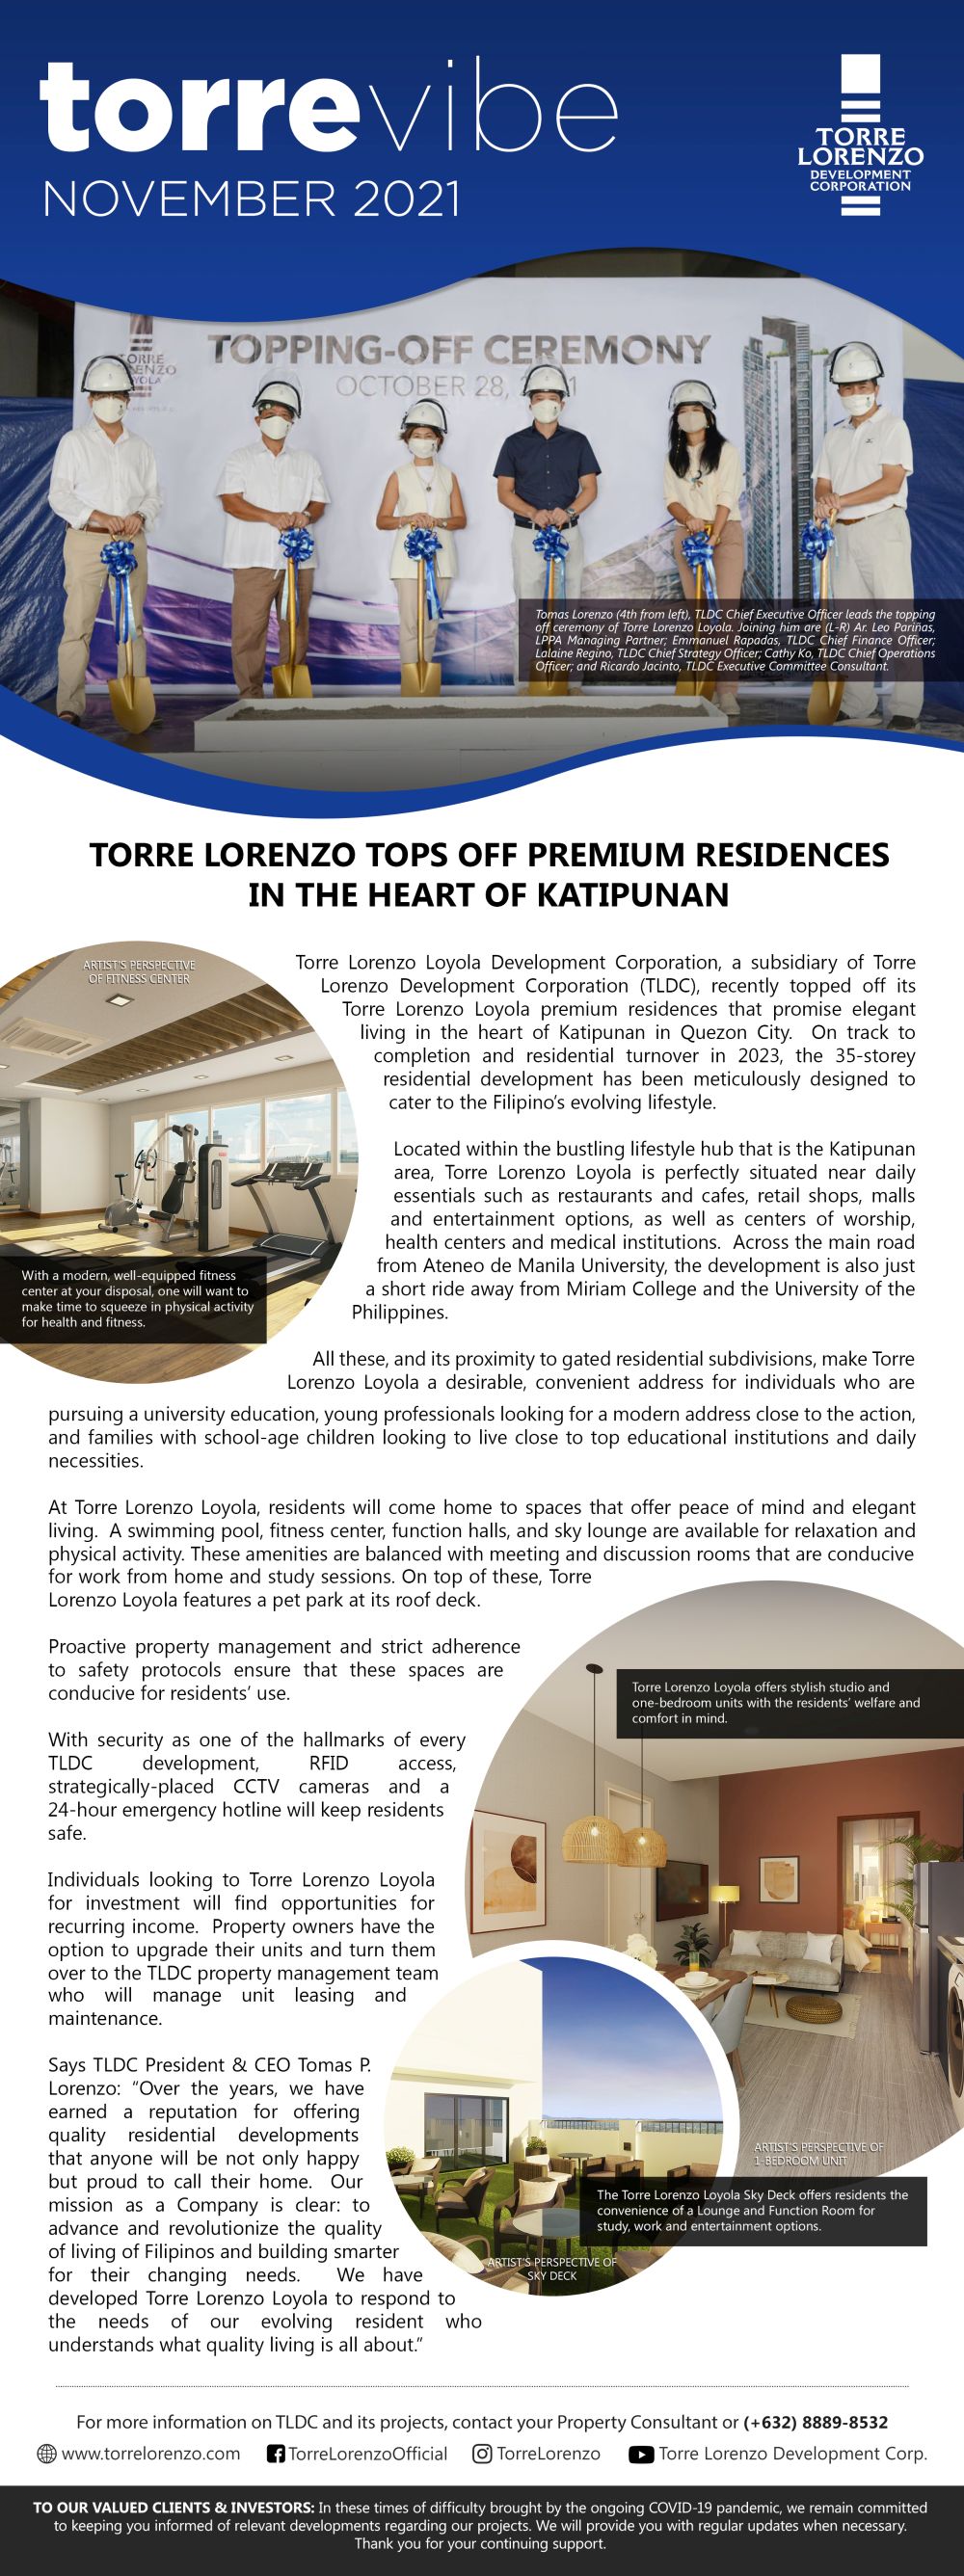 Torre Lorenzo tops off Premium Residences in the heart of Katipunan